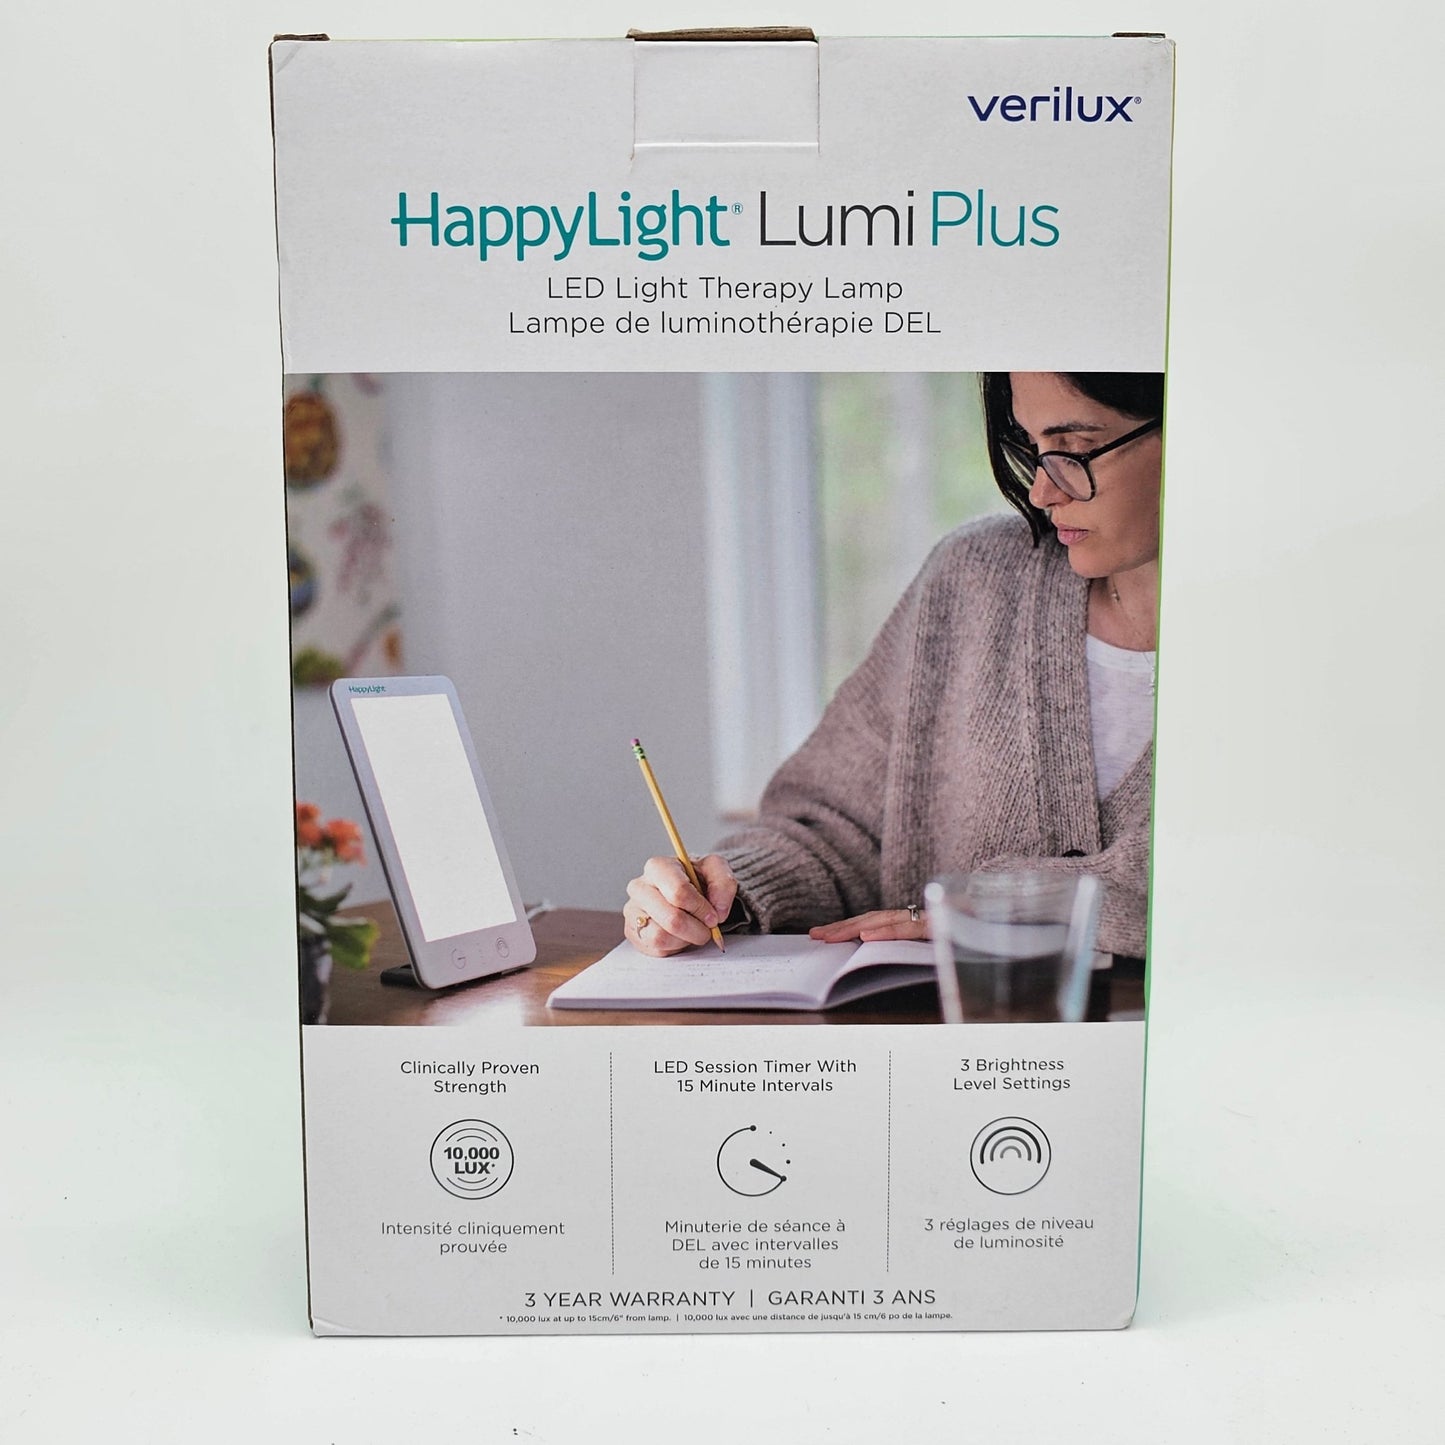 HappyLight Lumi Plus Verilux VT41WW3 - DQ Distribution